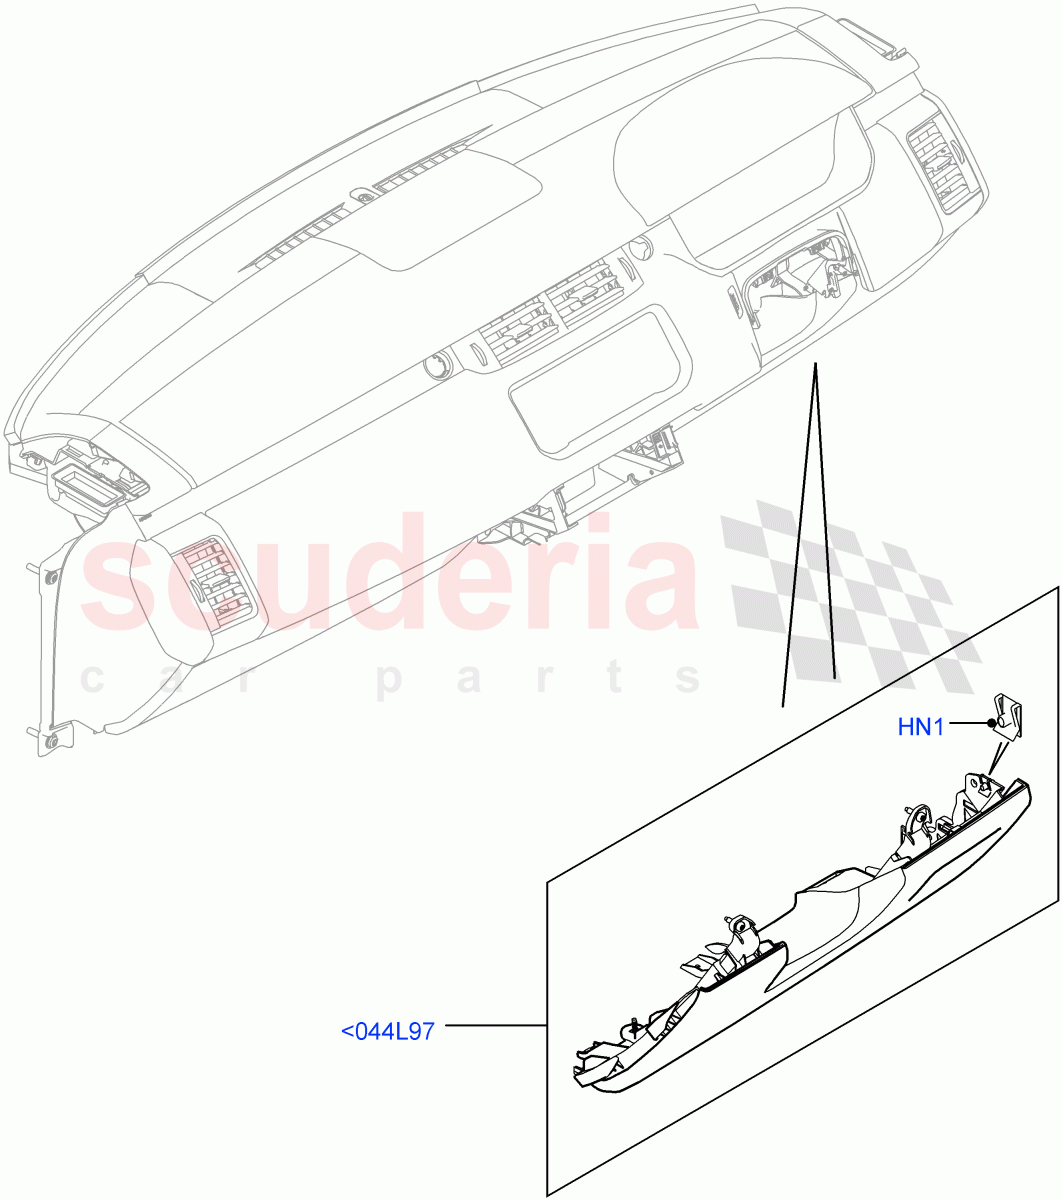 Instrument Panel(External, Lower) of Land Rover Land Rover Range Rover Sport (2014+) [2.0 Turbo Petrol AJ200P]